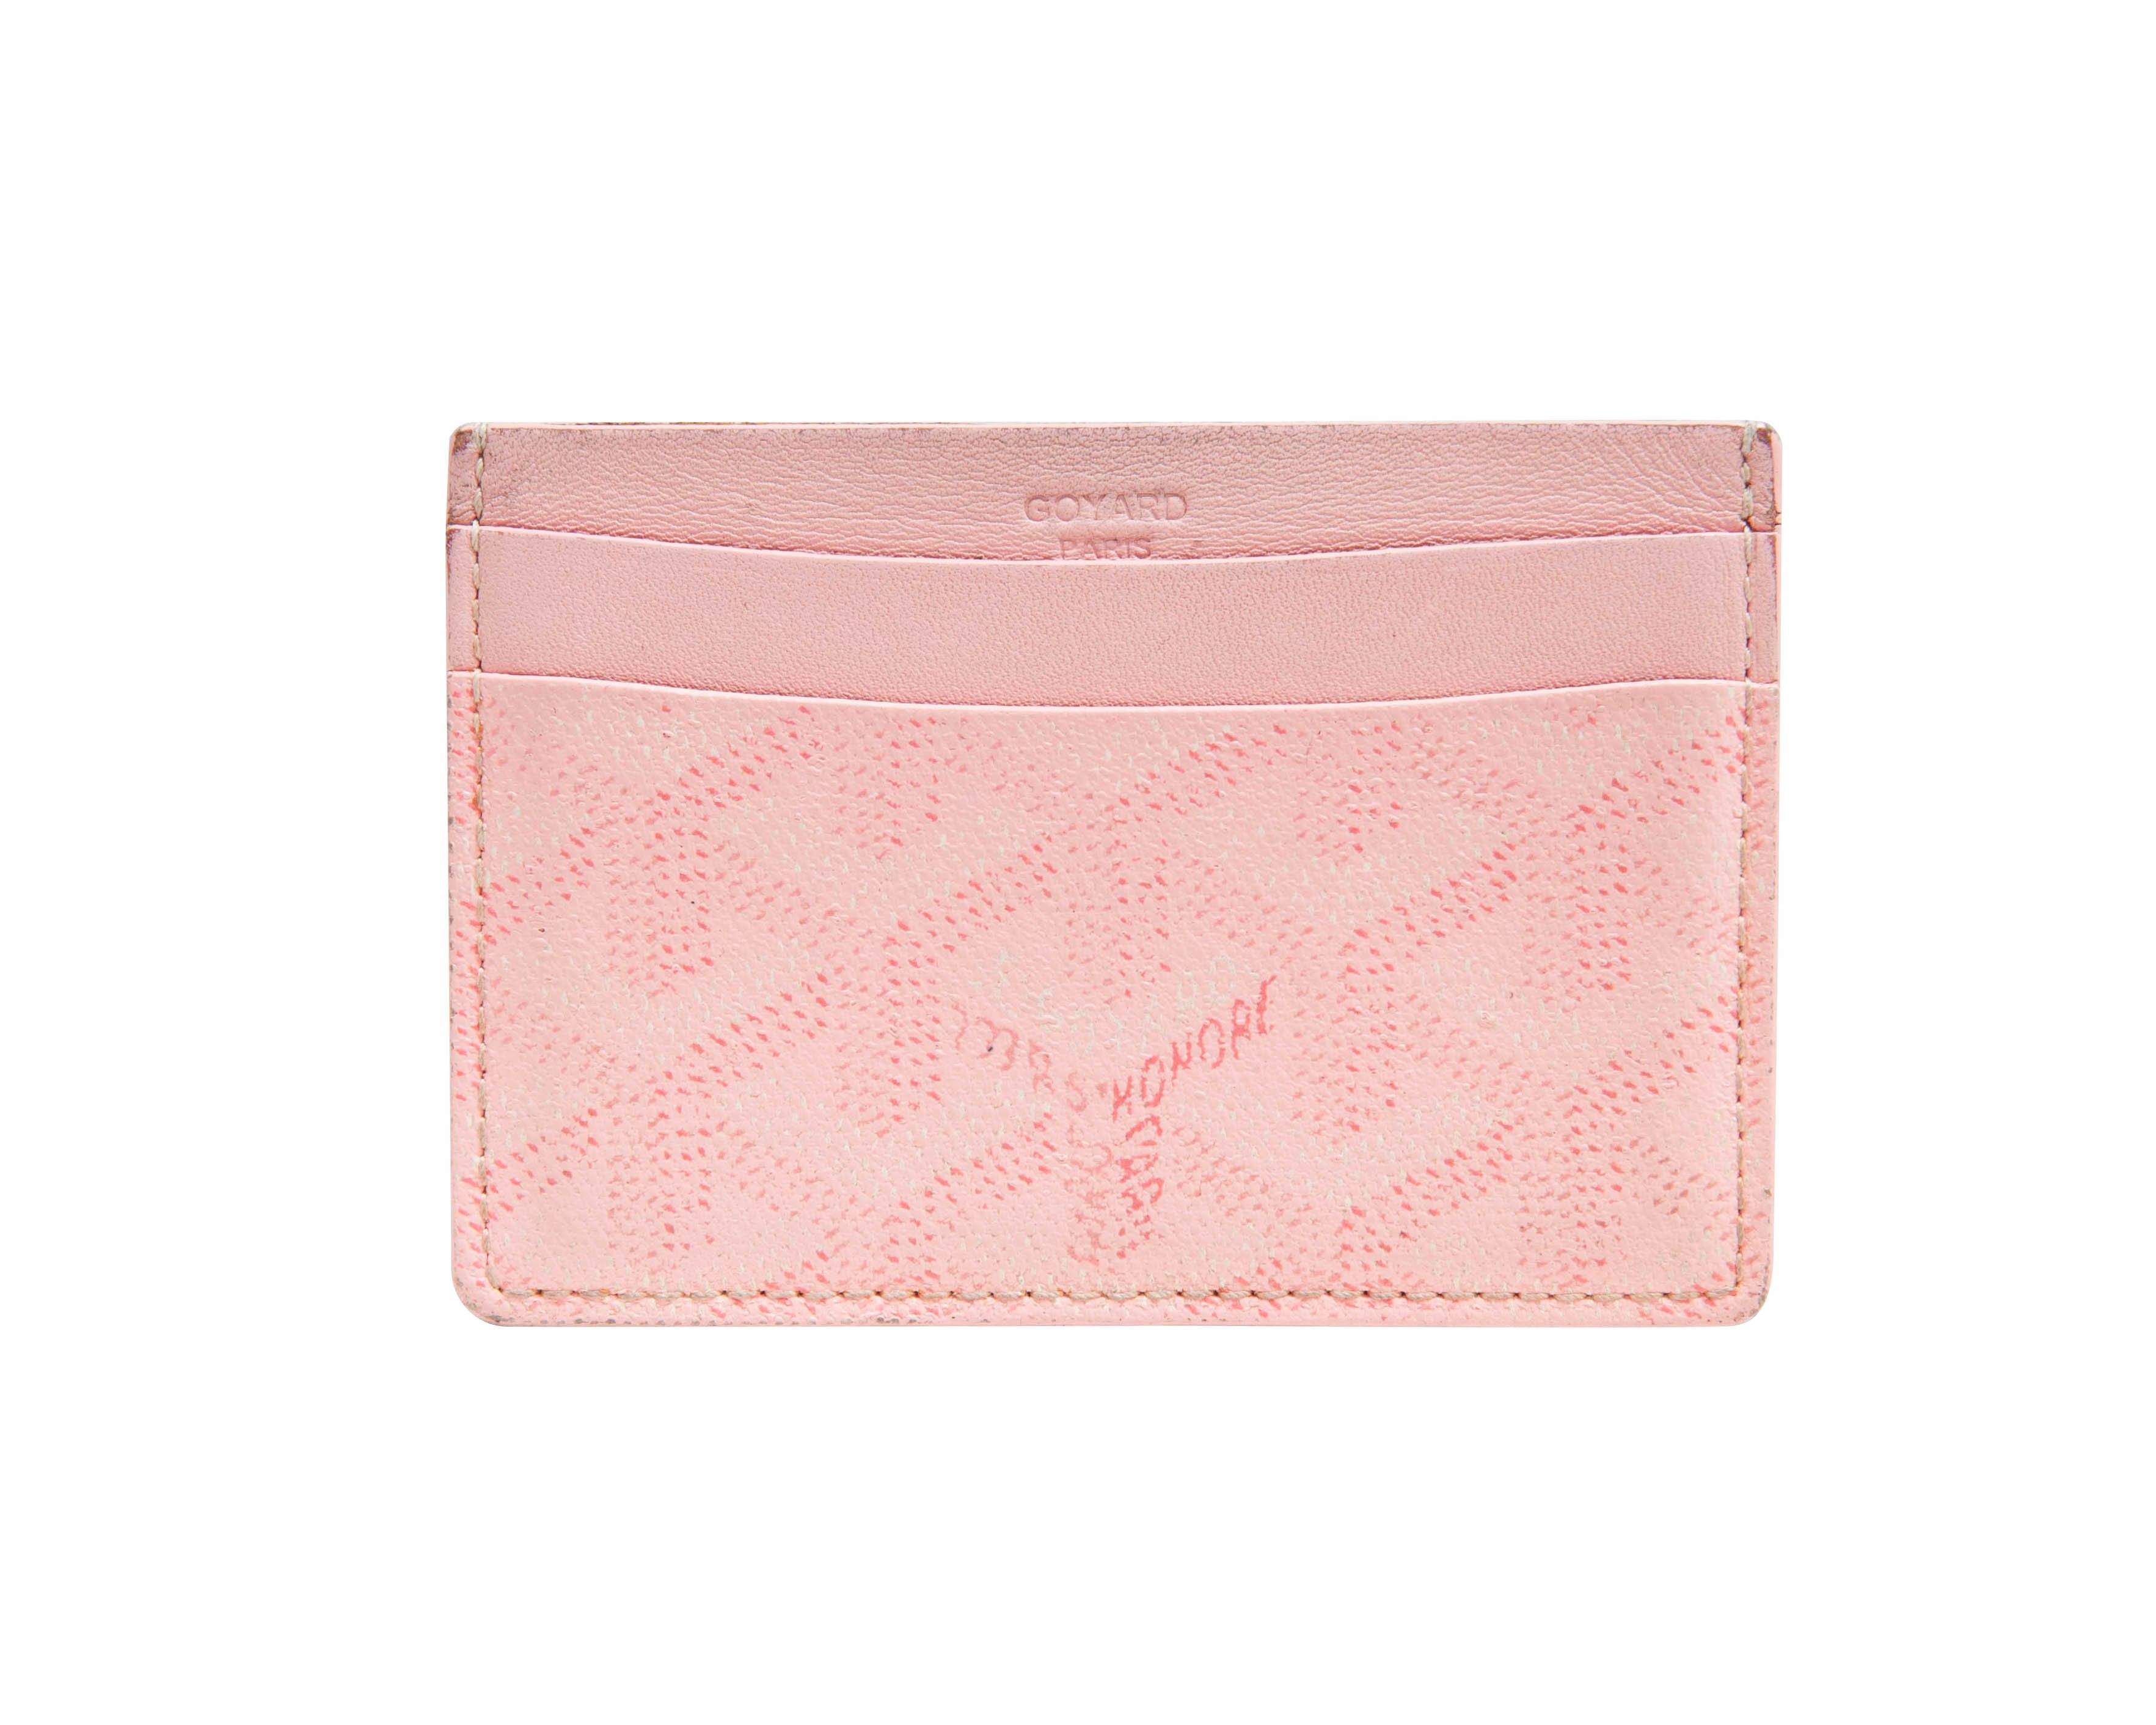 Goyard Goyardine Card Holder - Pink Wallets, Accessories - GOY22306